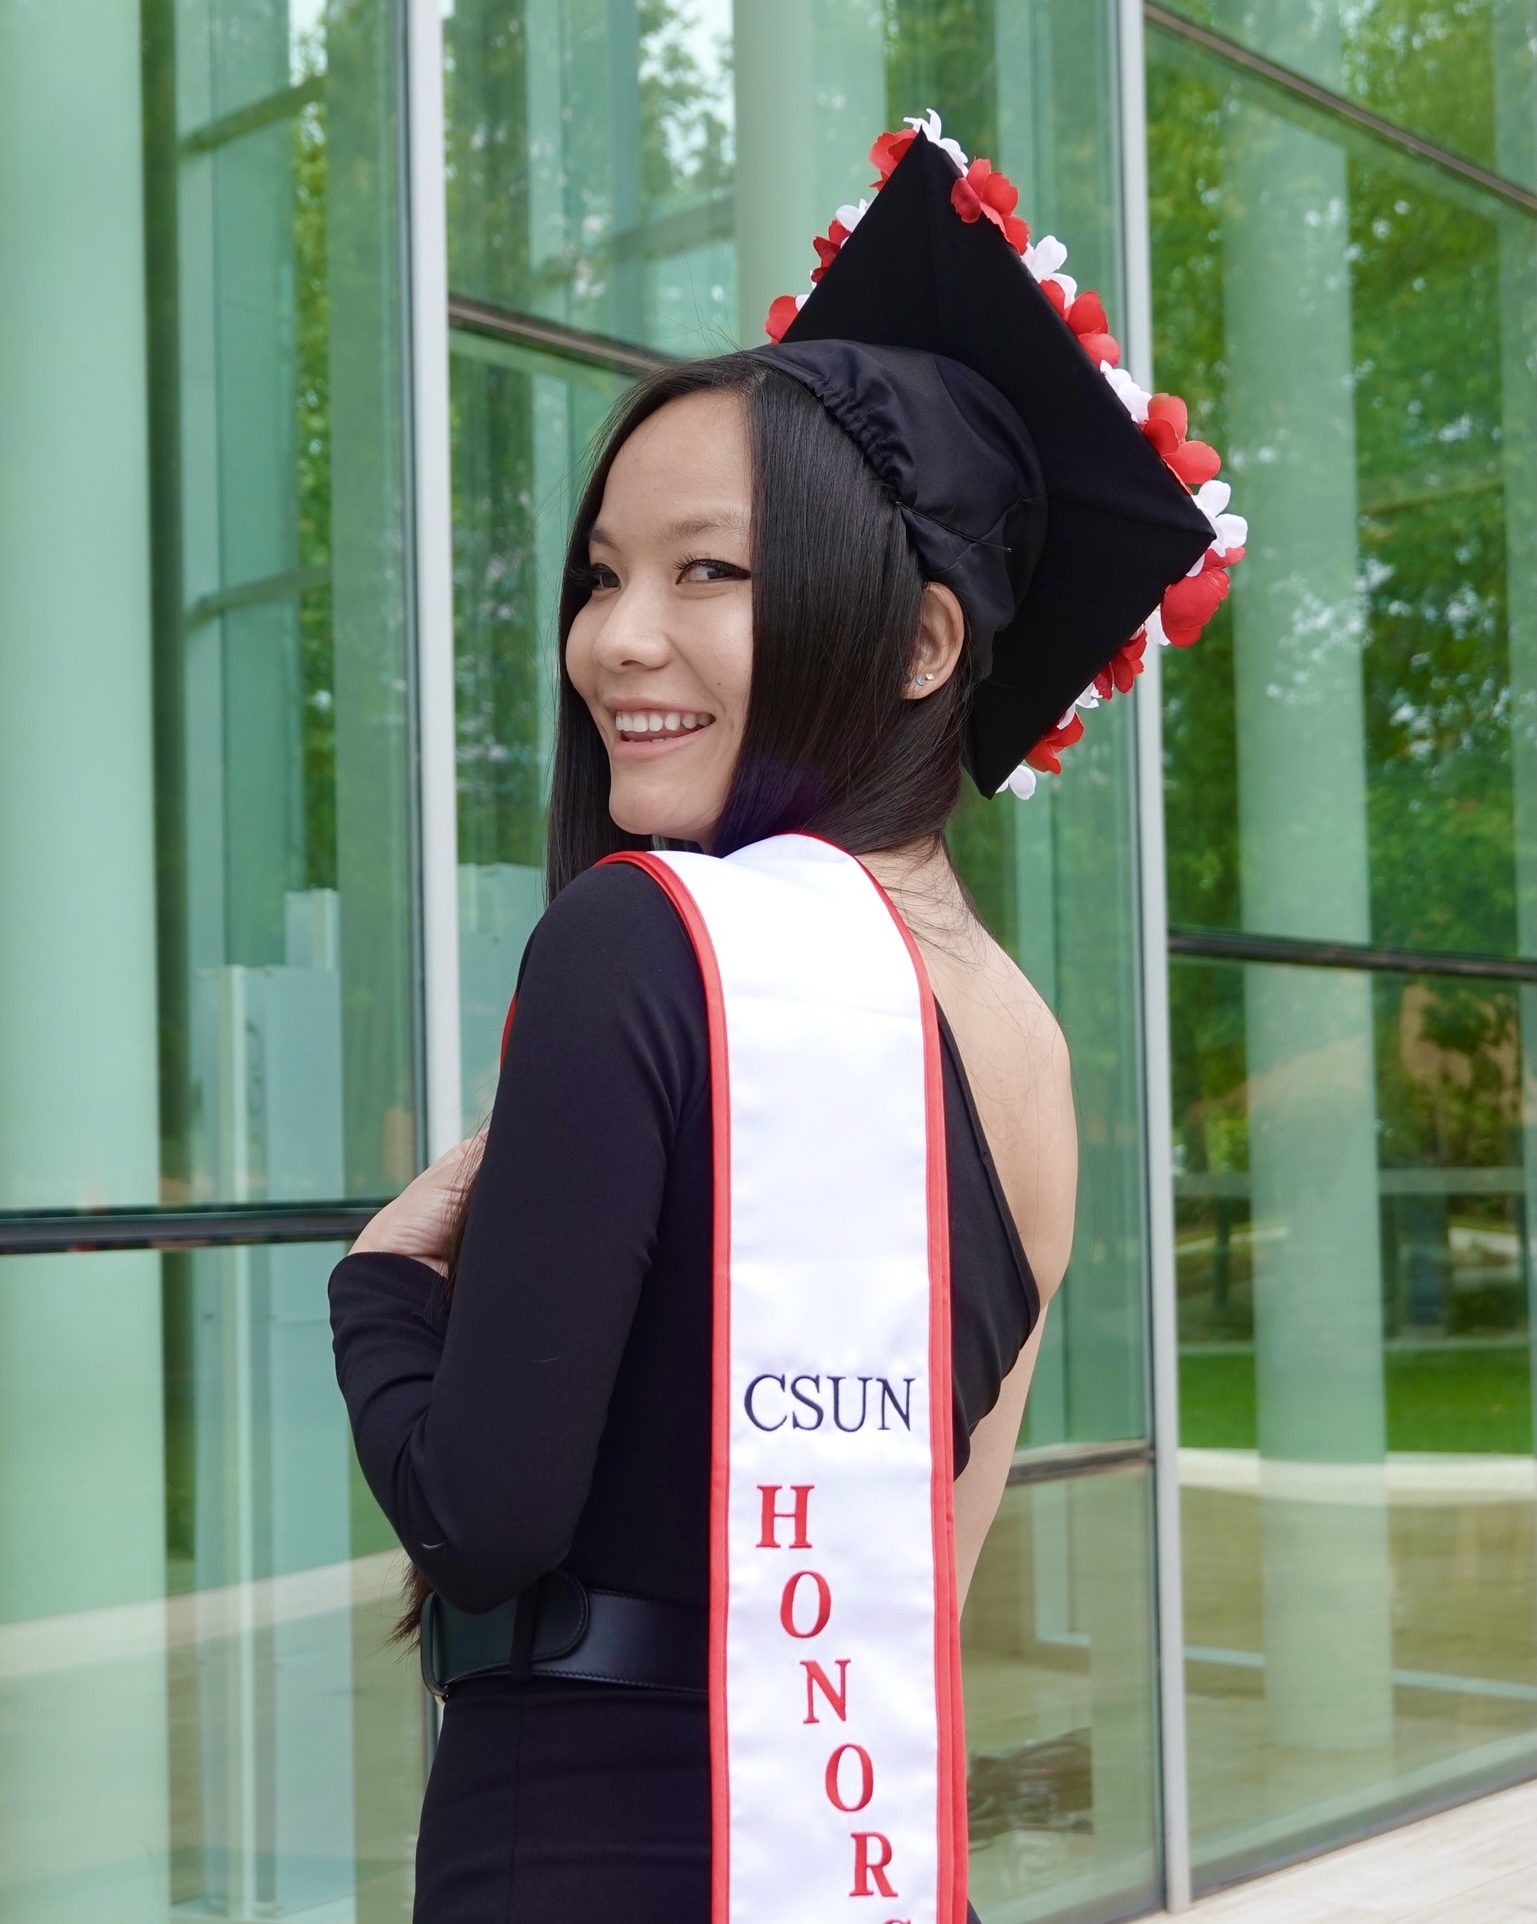 smiling girl wearing black dress graduation cap and white sash that says "csun honors"